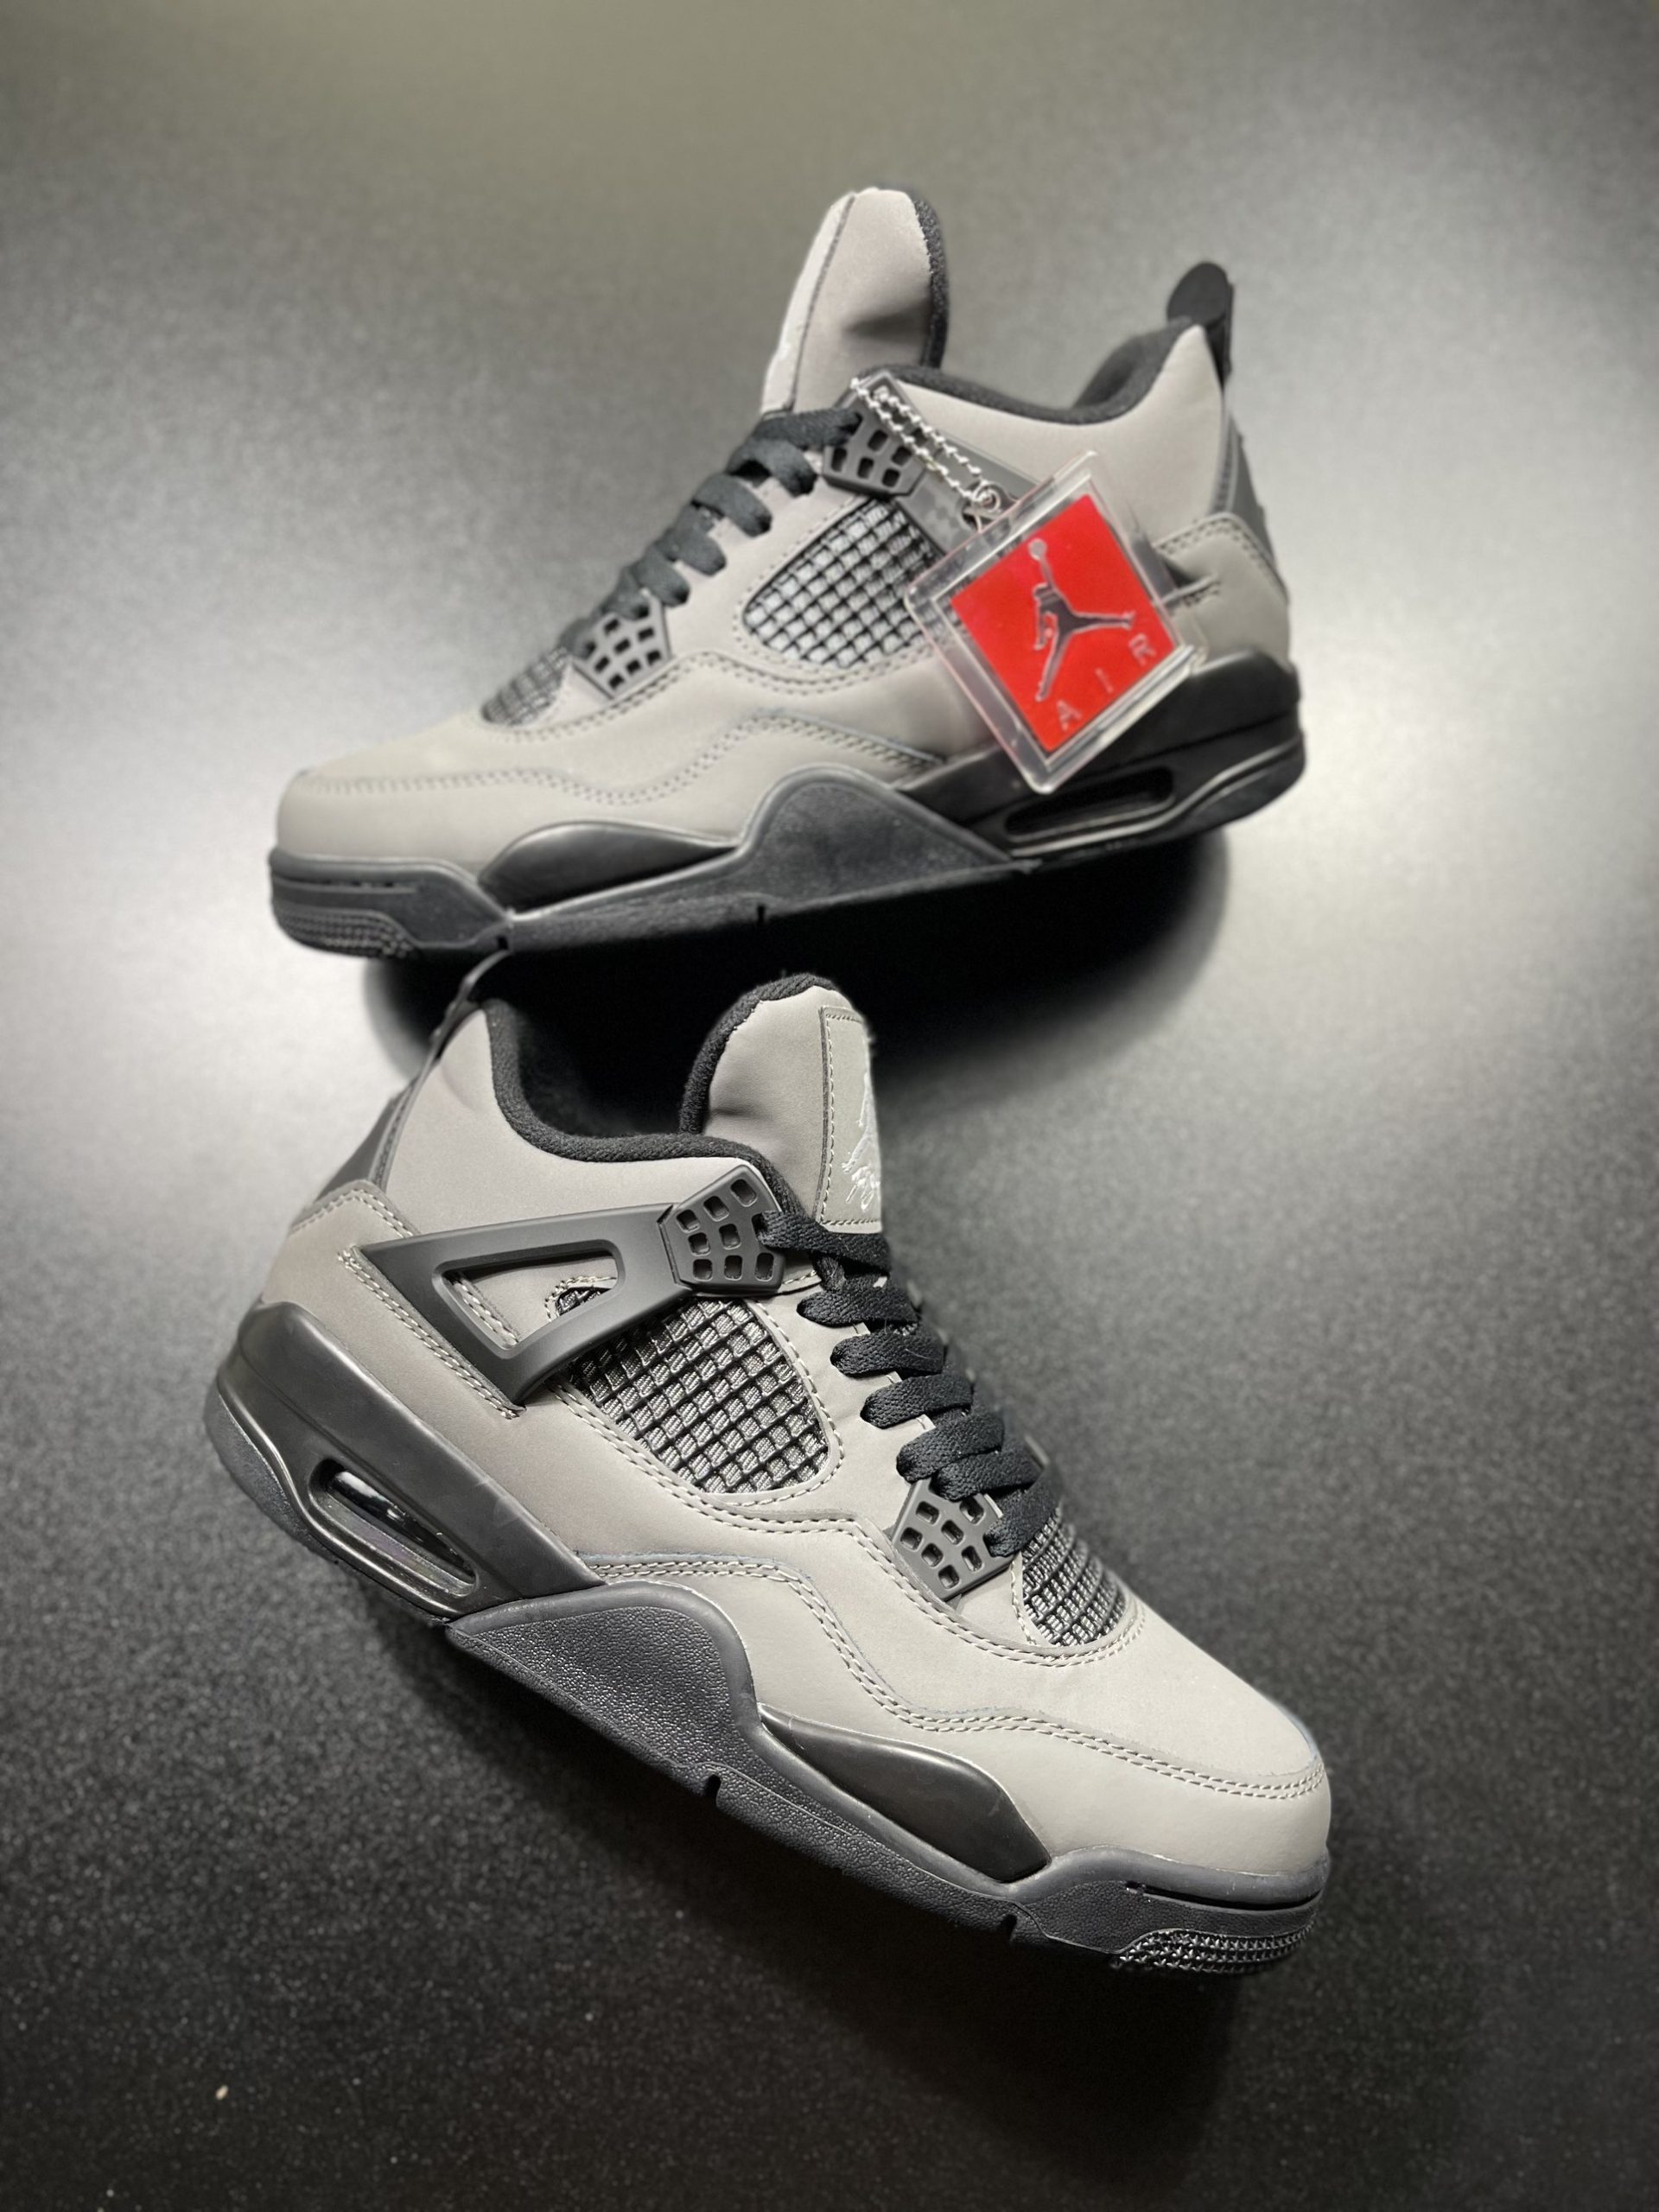 Giày Nike Air Jordan 4 Retro Xám Đen